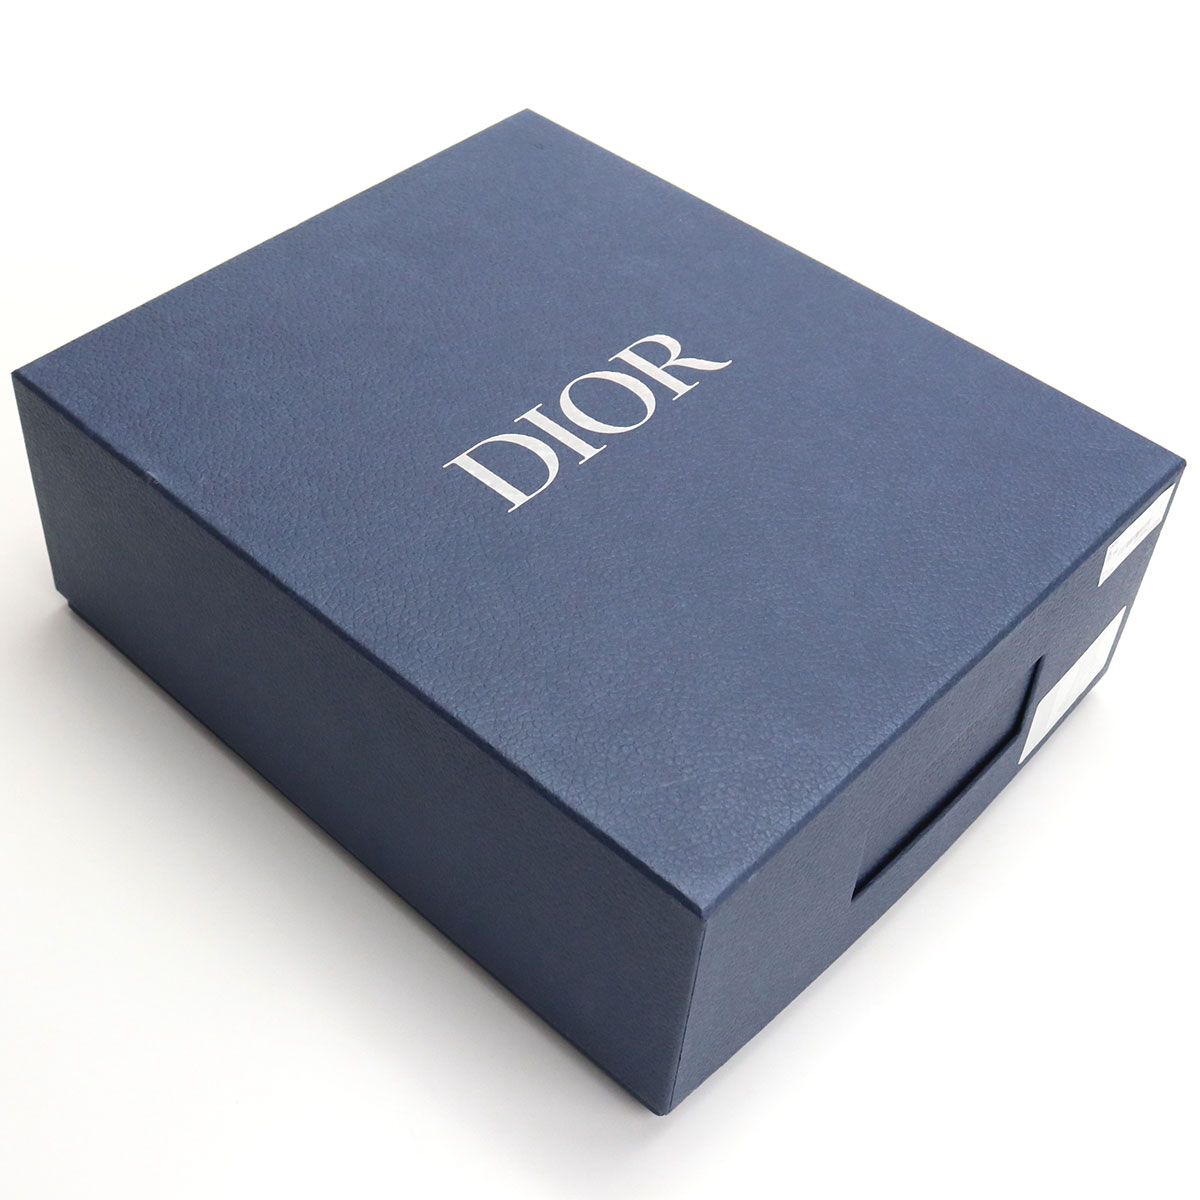 RUPXKC / ディオール Christian Dior メンズ スニーカー 3SN260 ZBL 560 ホワイト系 ブルー系 bos